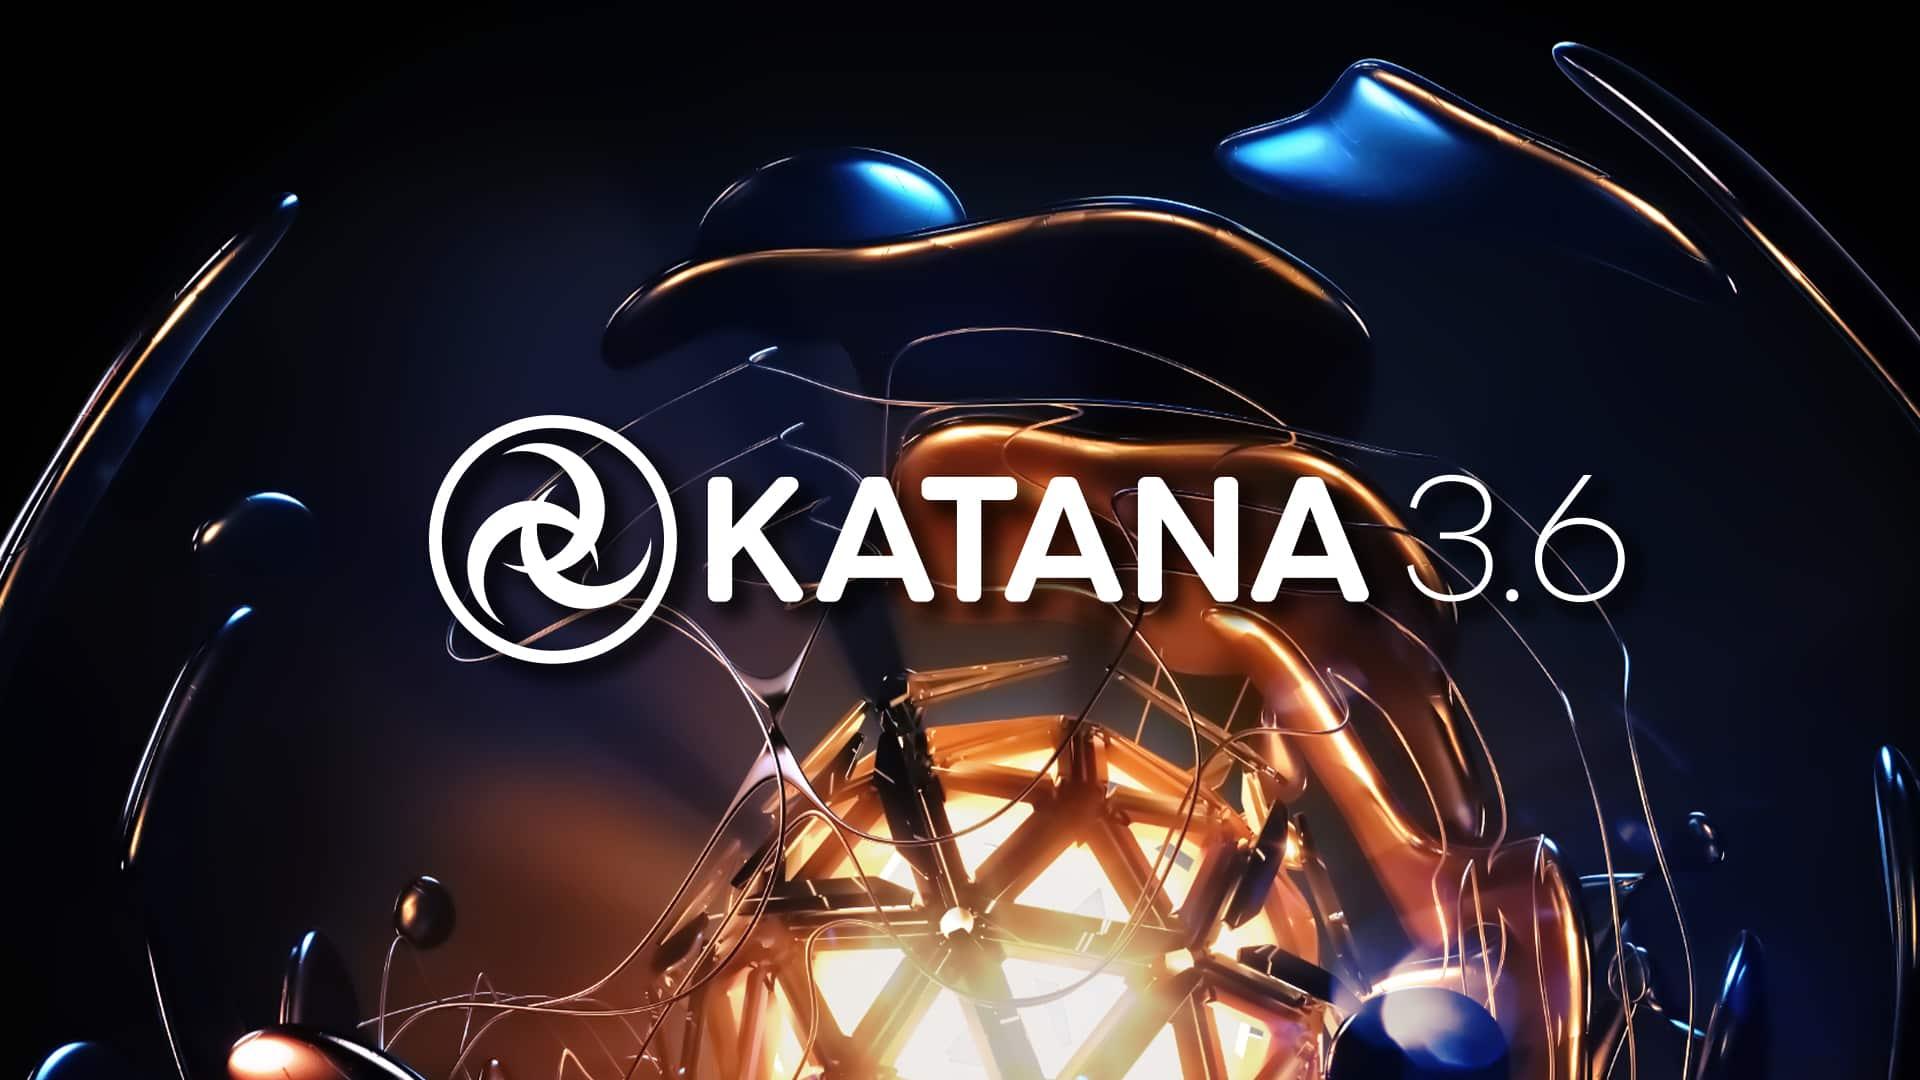 Katana 3.6 press release